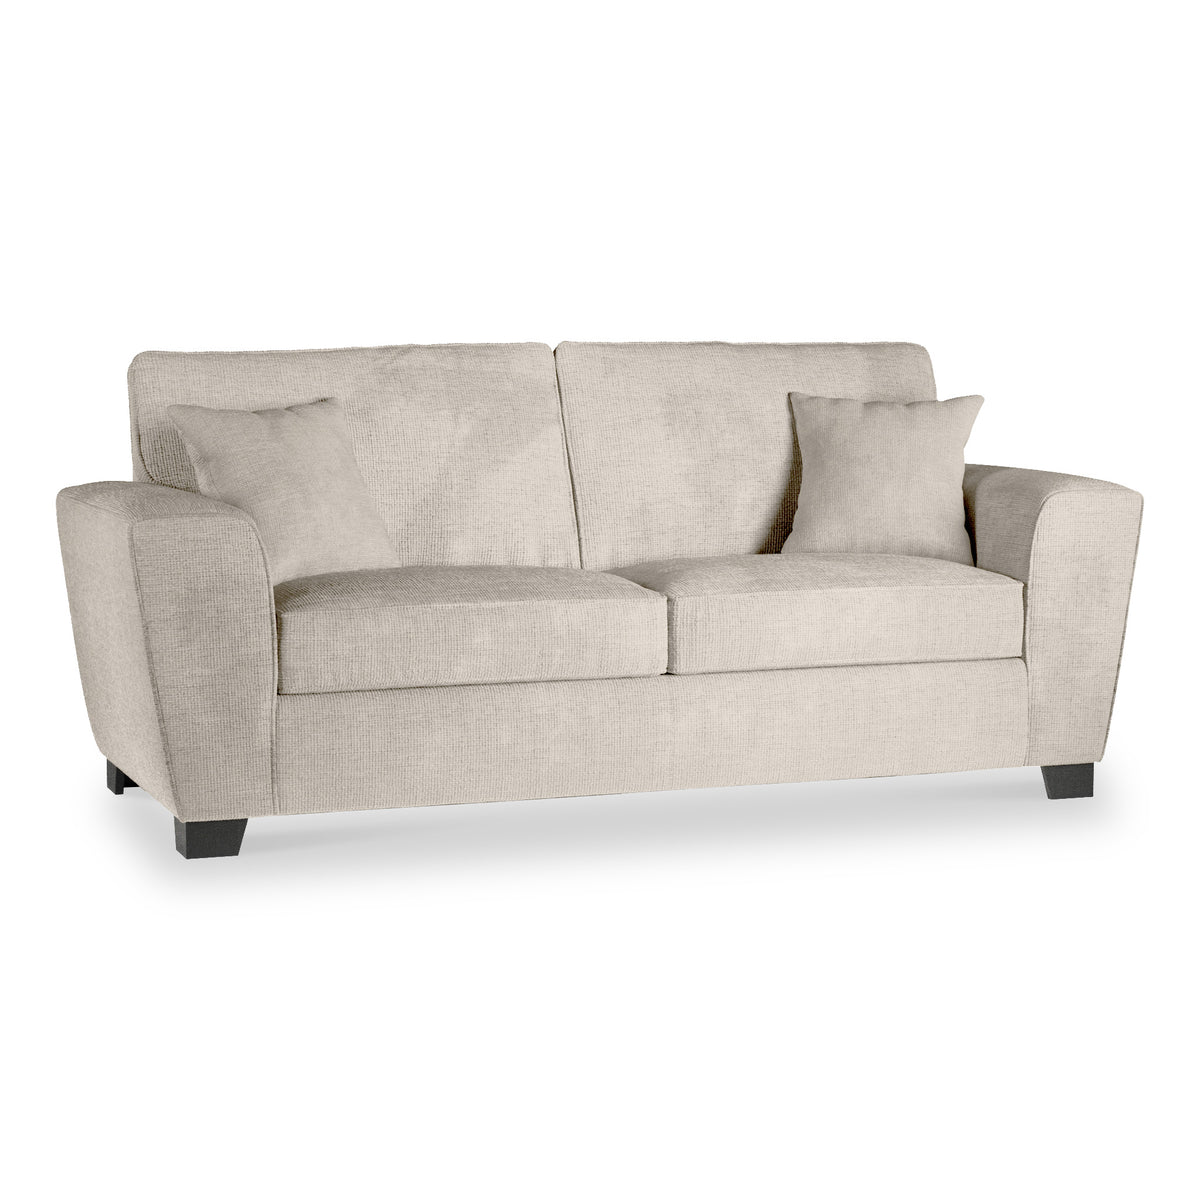 Chester Cream Hopsack 3 Seater Sofa from Roseland Furniture